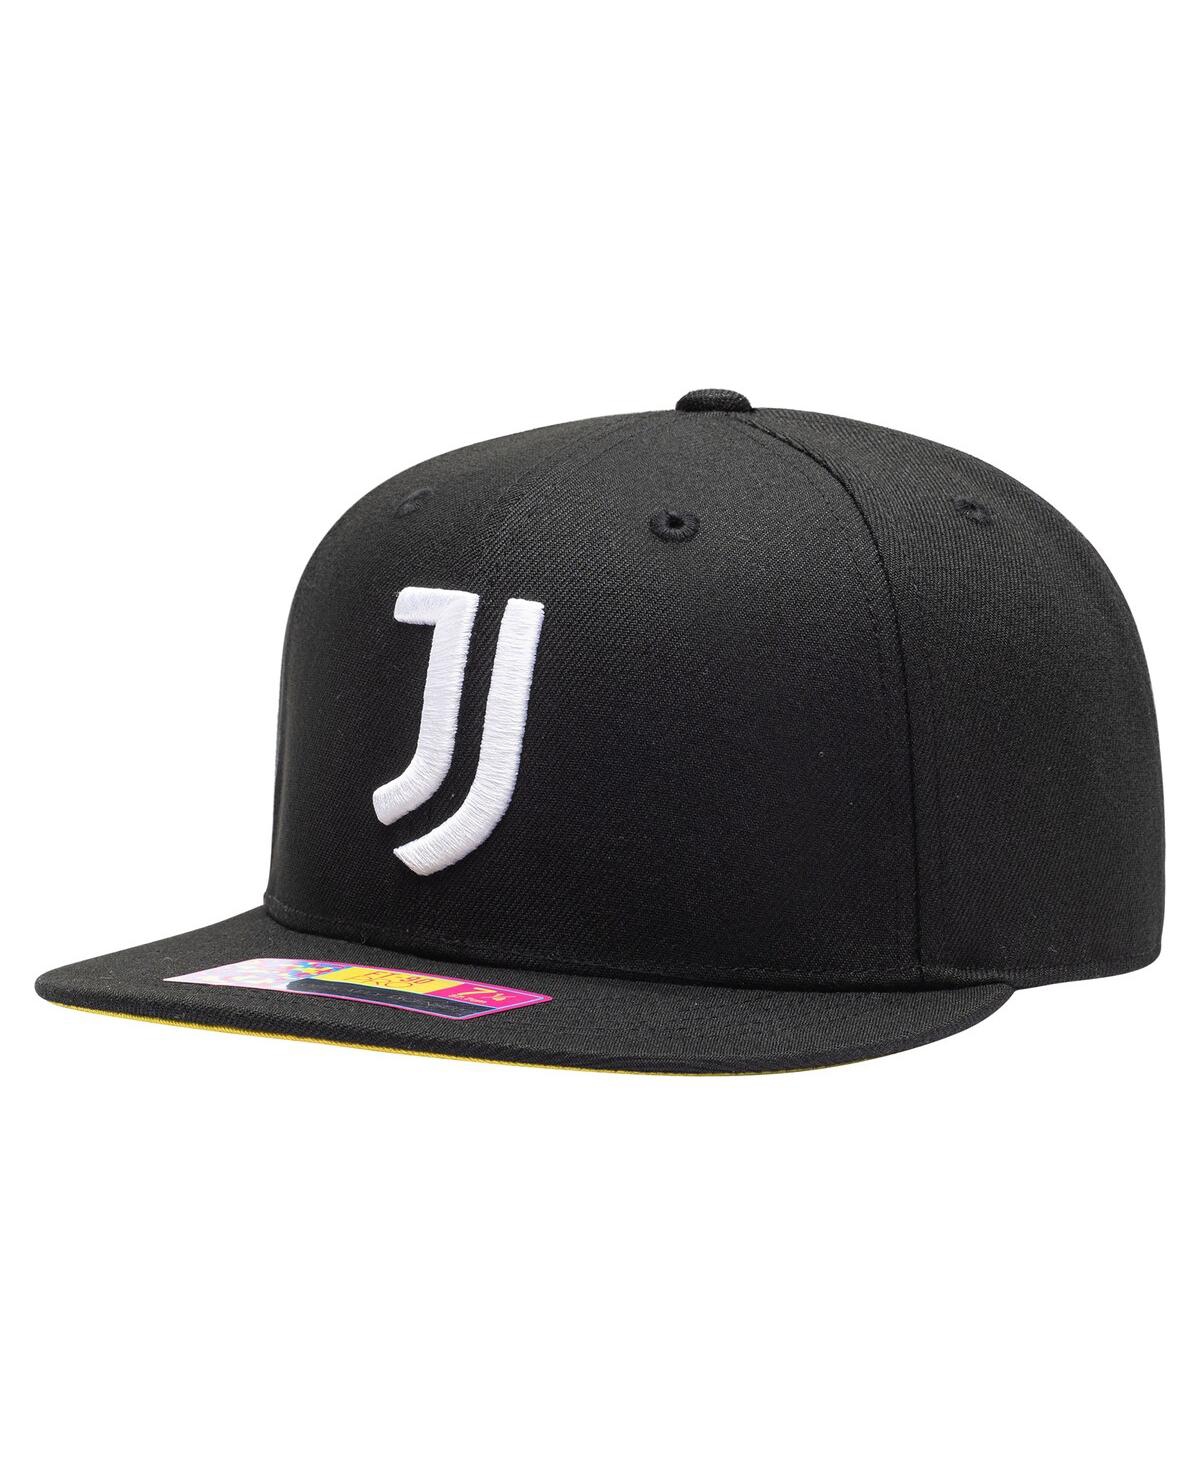 Shop Fan Ink Men's Black Juventus Draft Night Fitted Hat